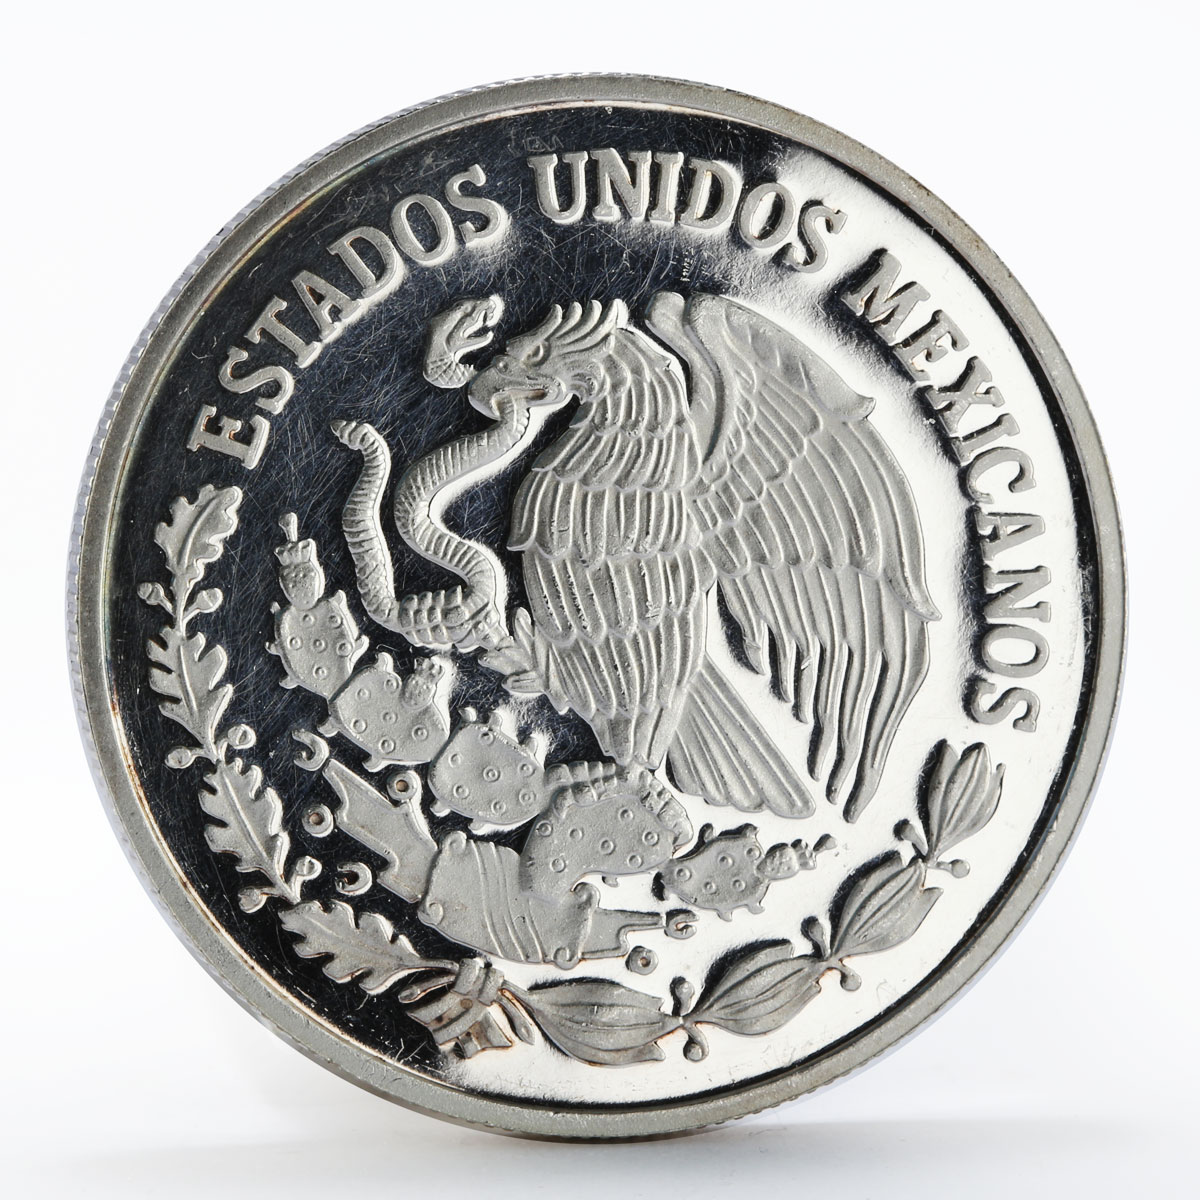 Mexico 10 pesos Michoacan butterflies II edition proof silver coin 2006